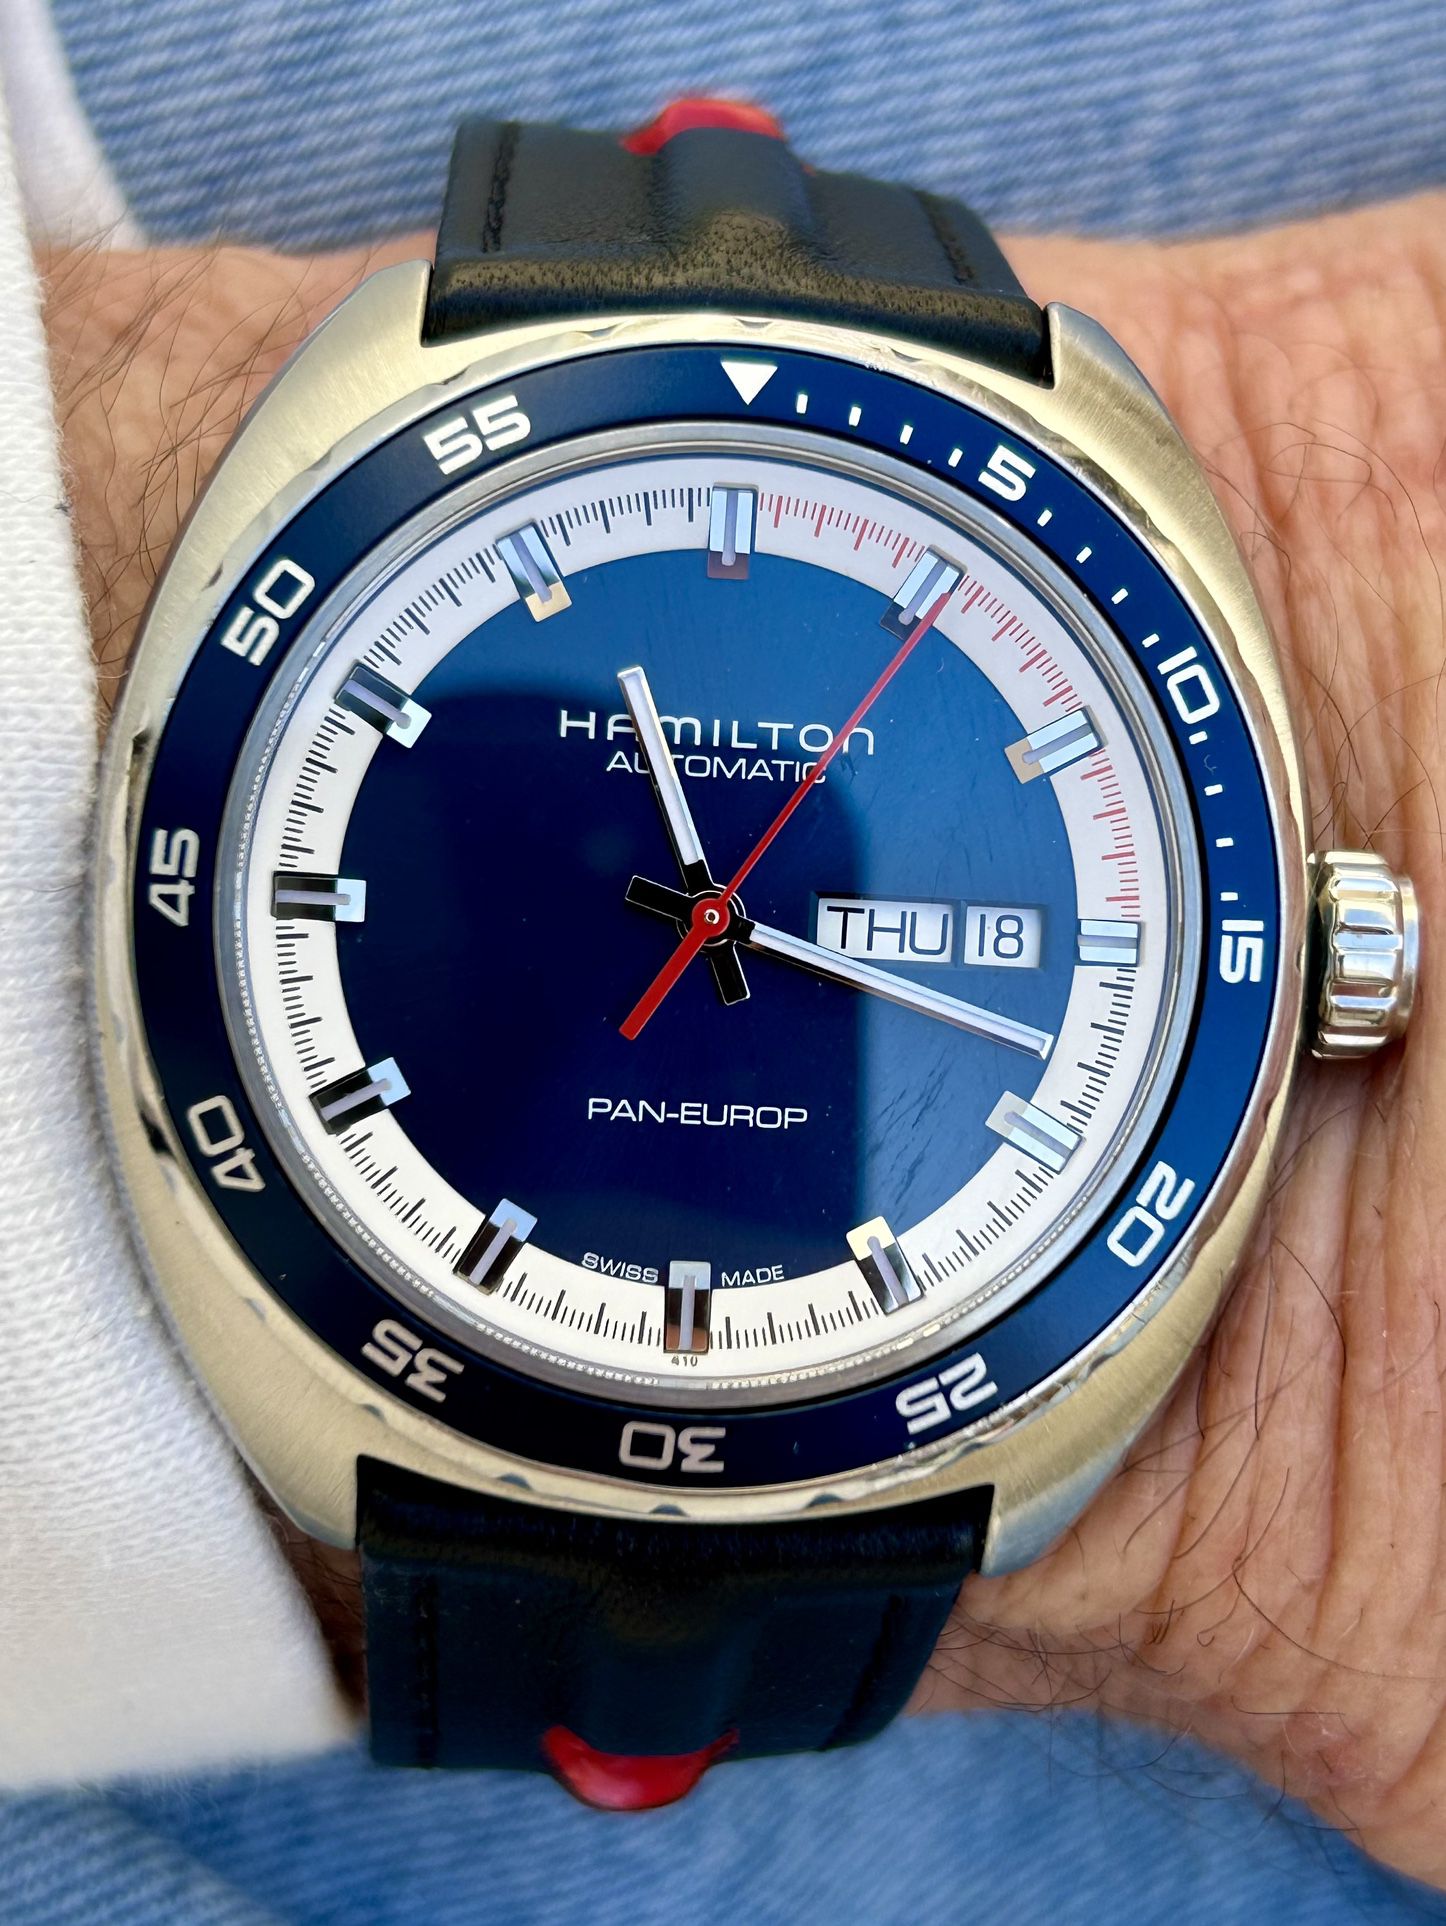 HAMILTON Pan Euro H354050 Day Date Blue Dial Automatic Men's Watch